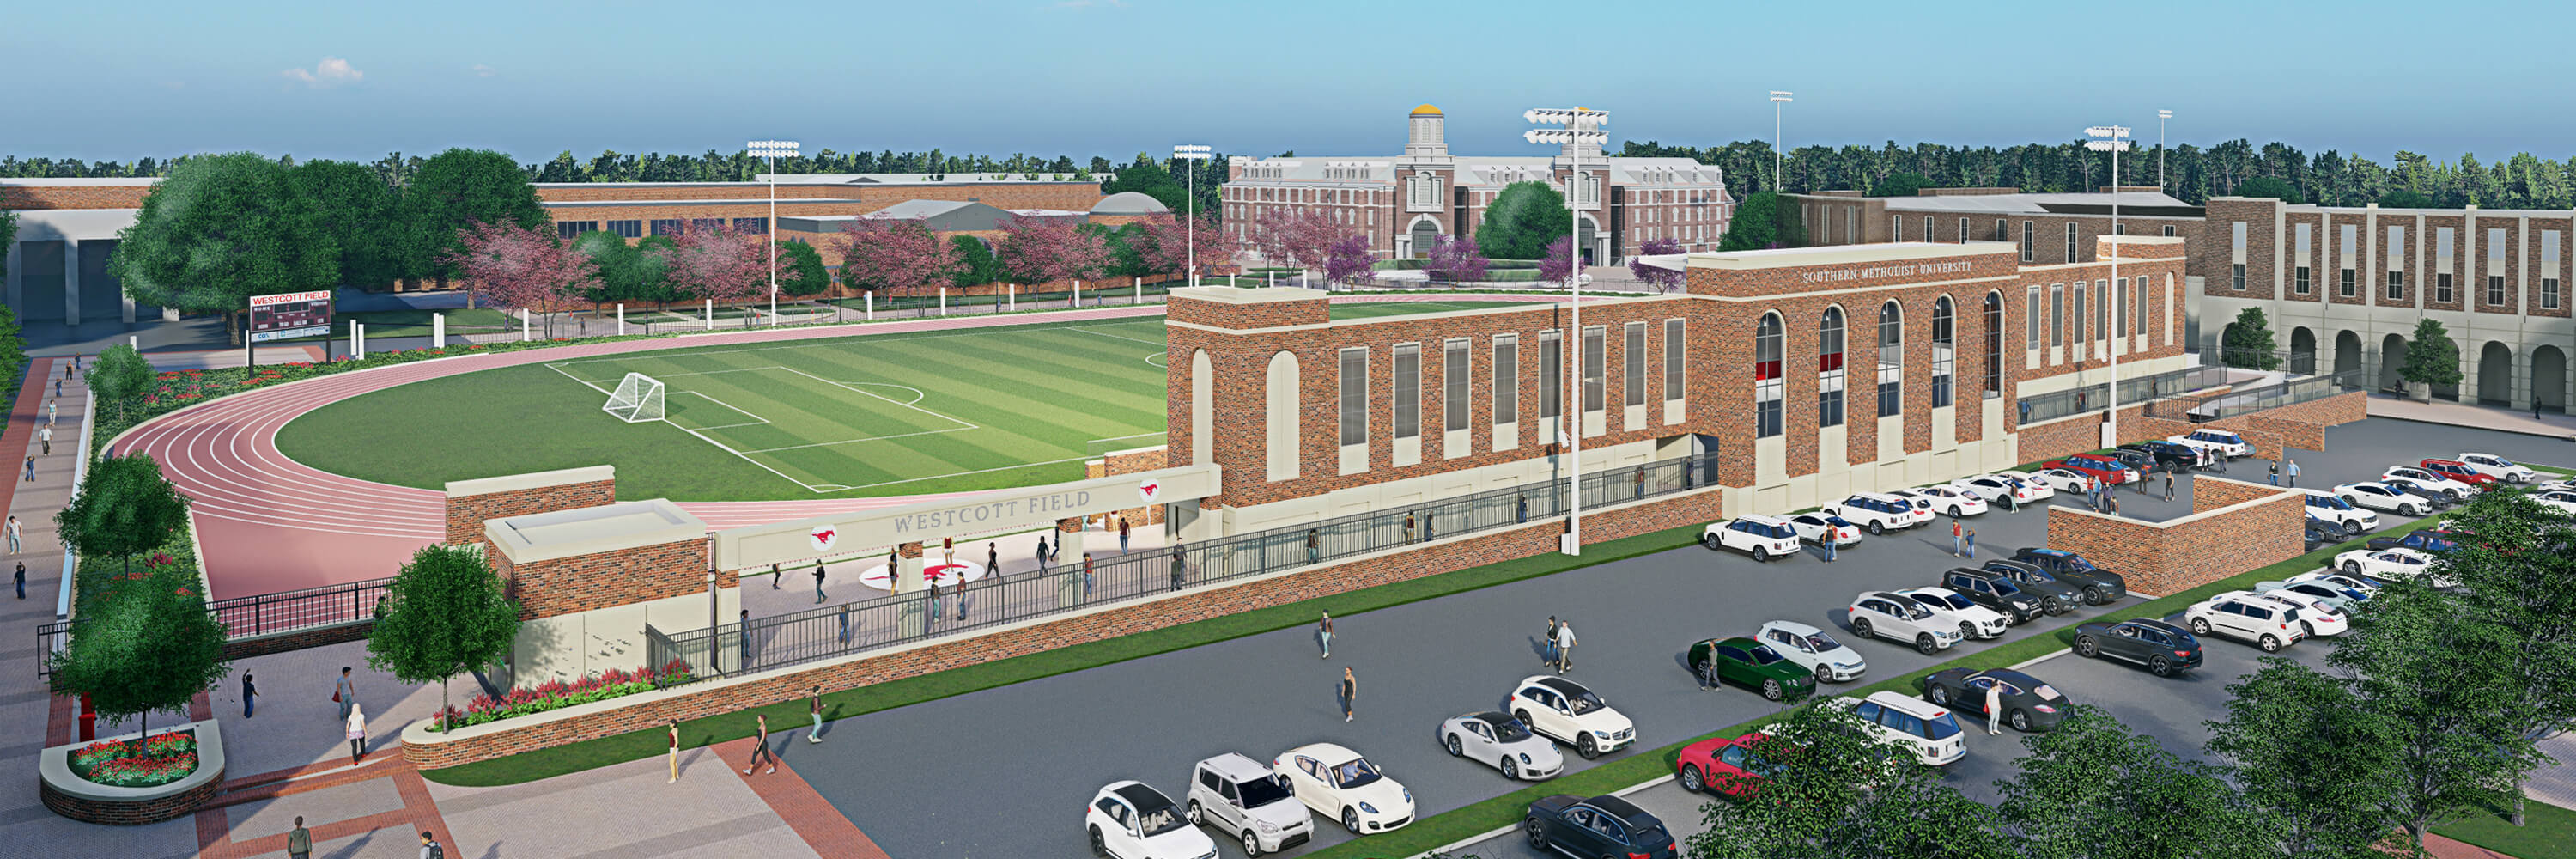 Southern Methodist University Washburne Soccer and Track Stadium